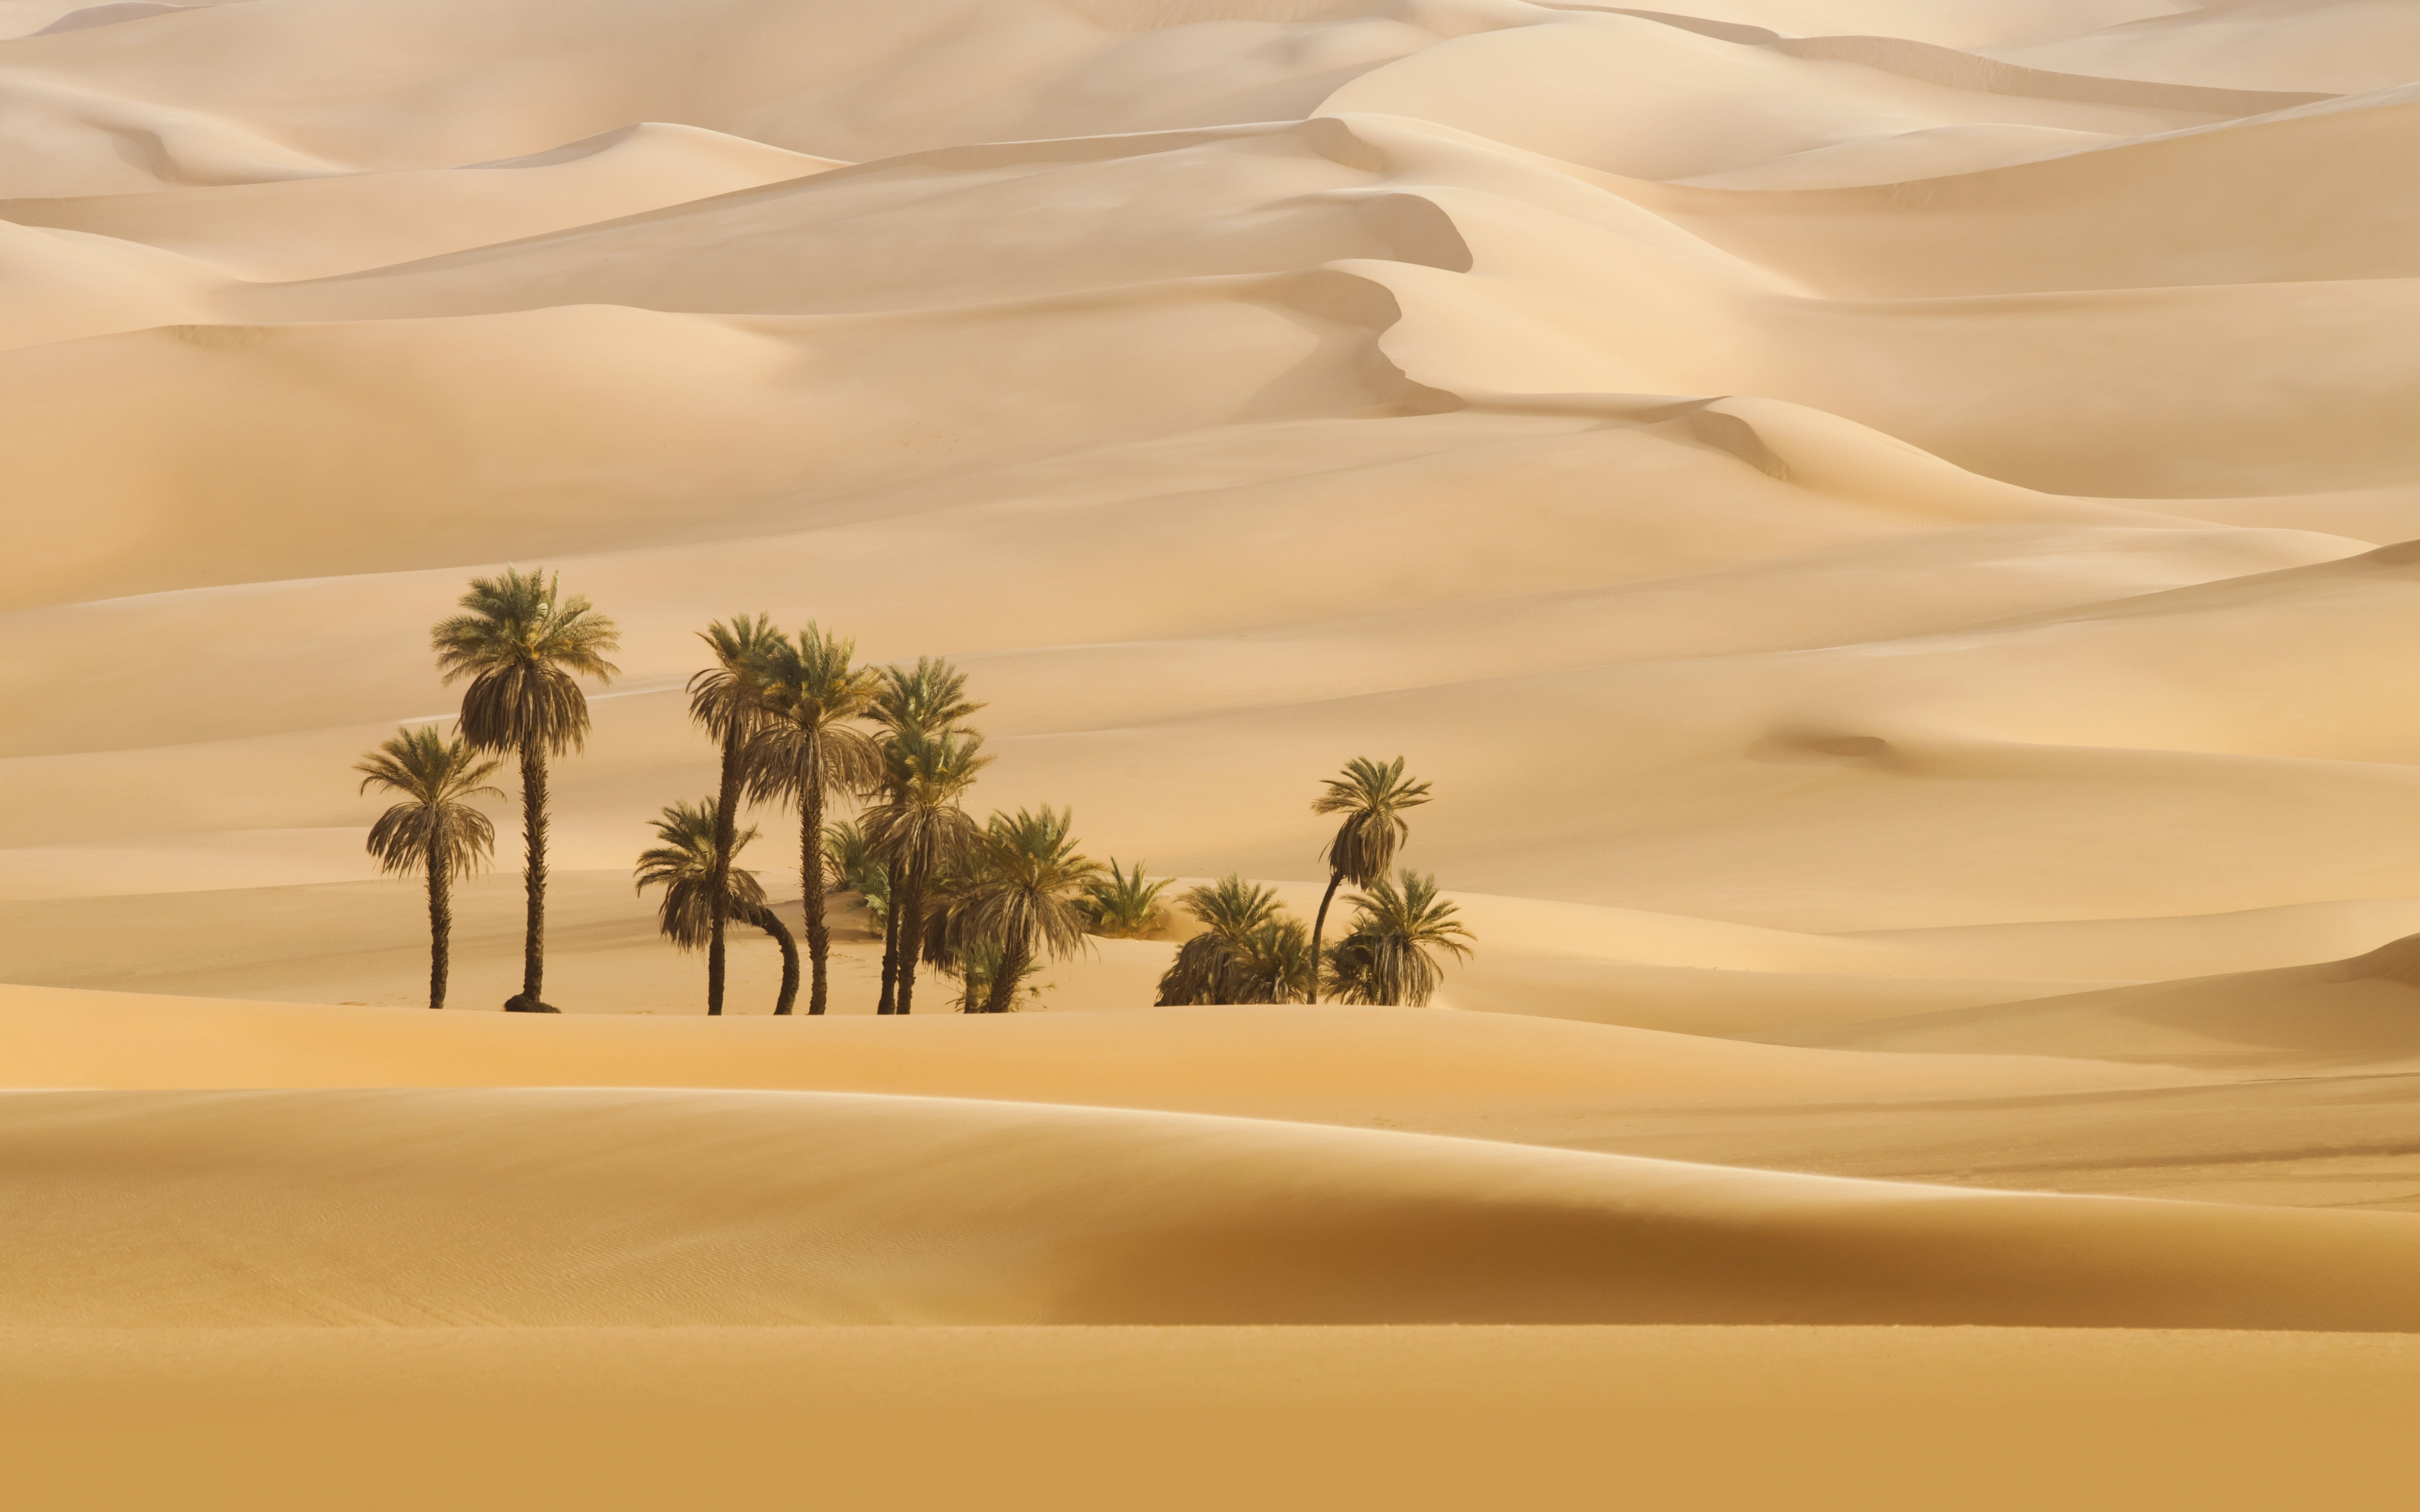 Landscape, desert, palm trees, 2880x1800 wallpaper